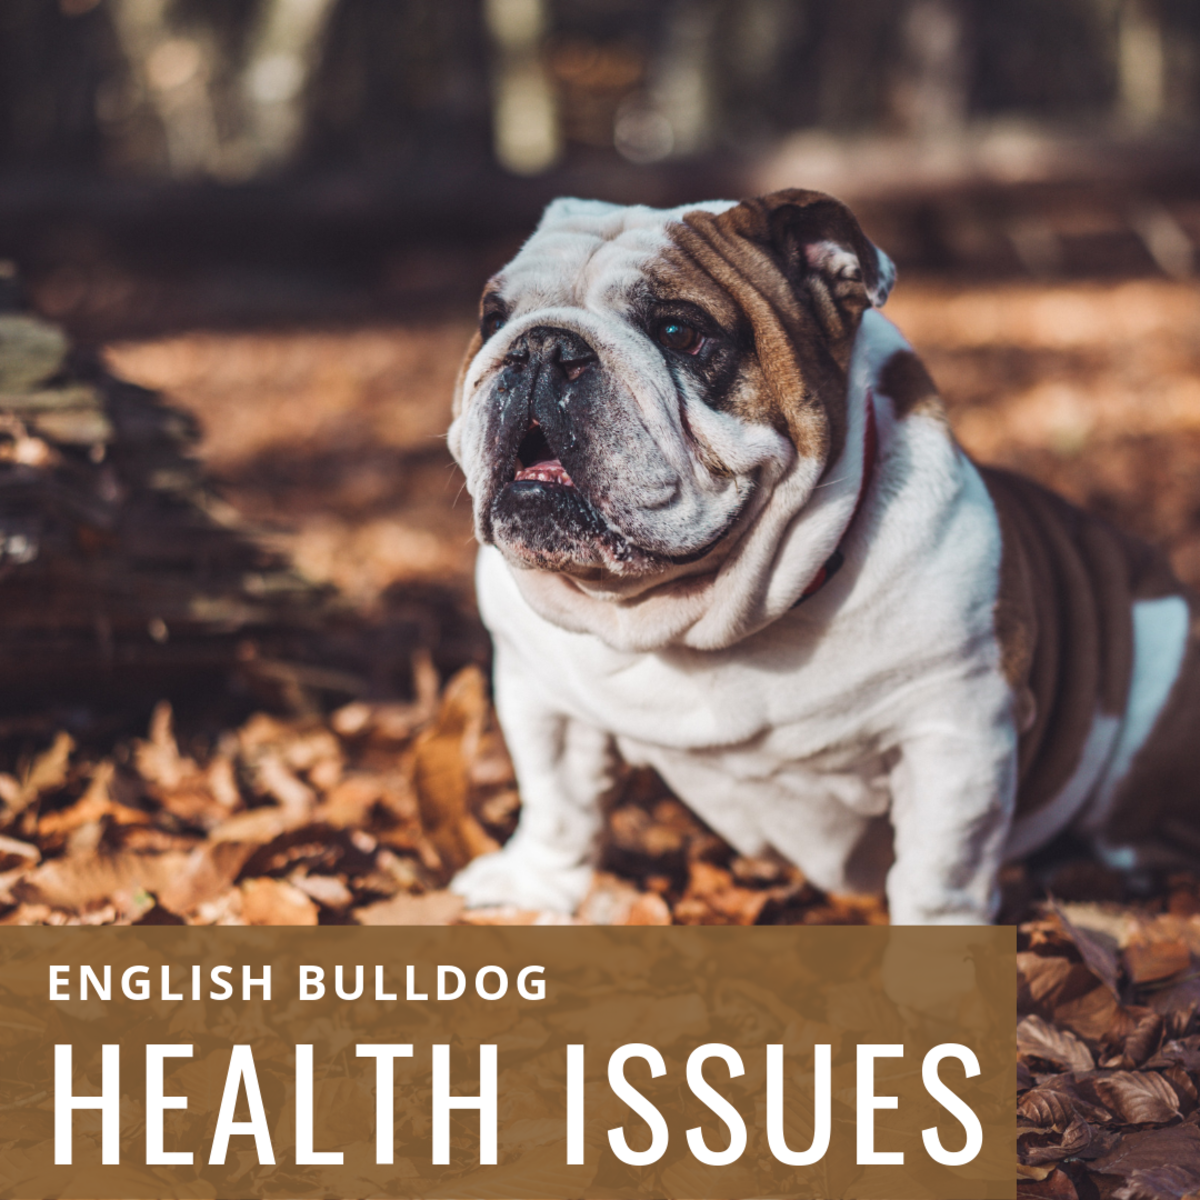 Raising Awareness About English Bulldog Health Issues ...